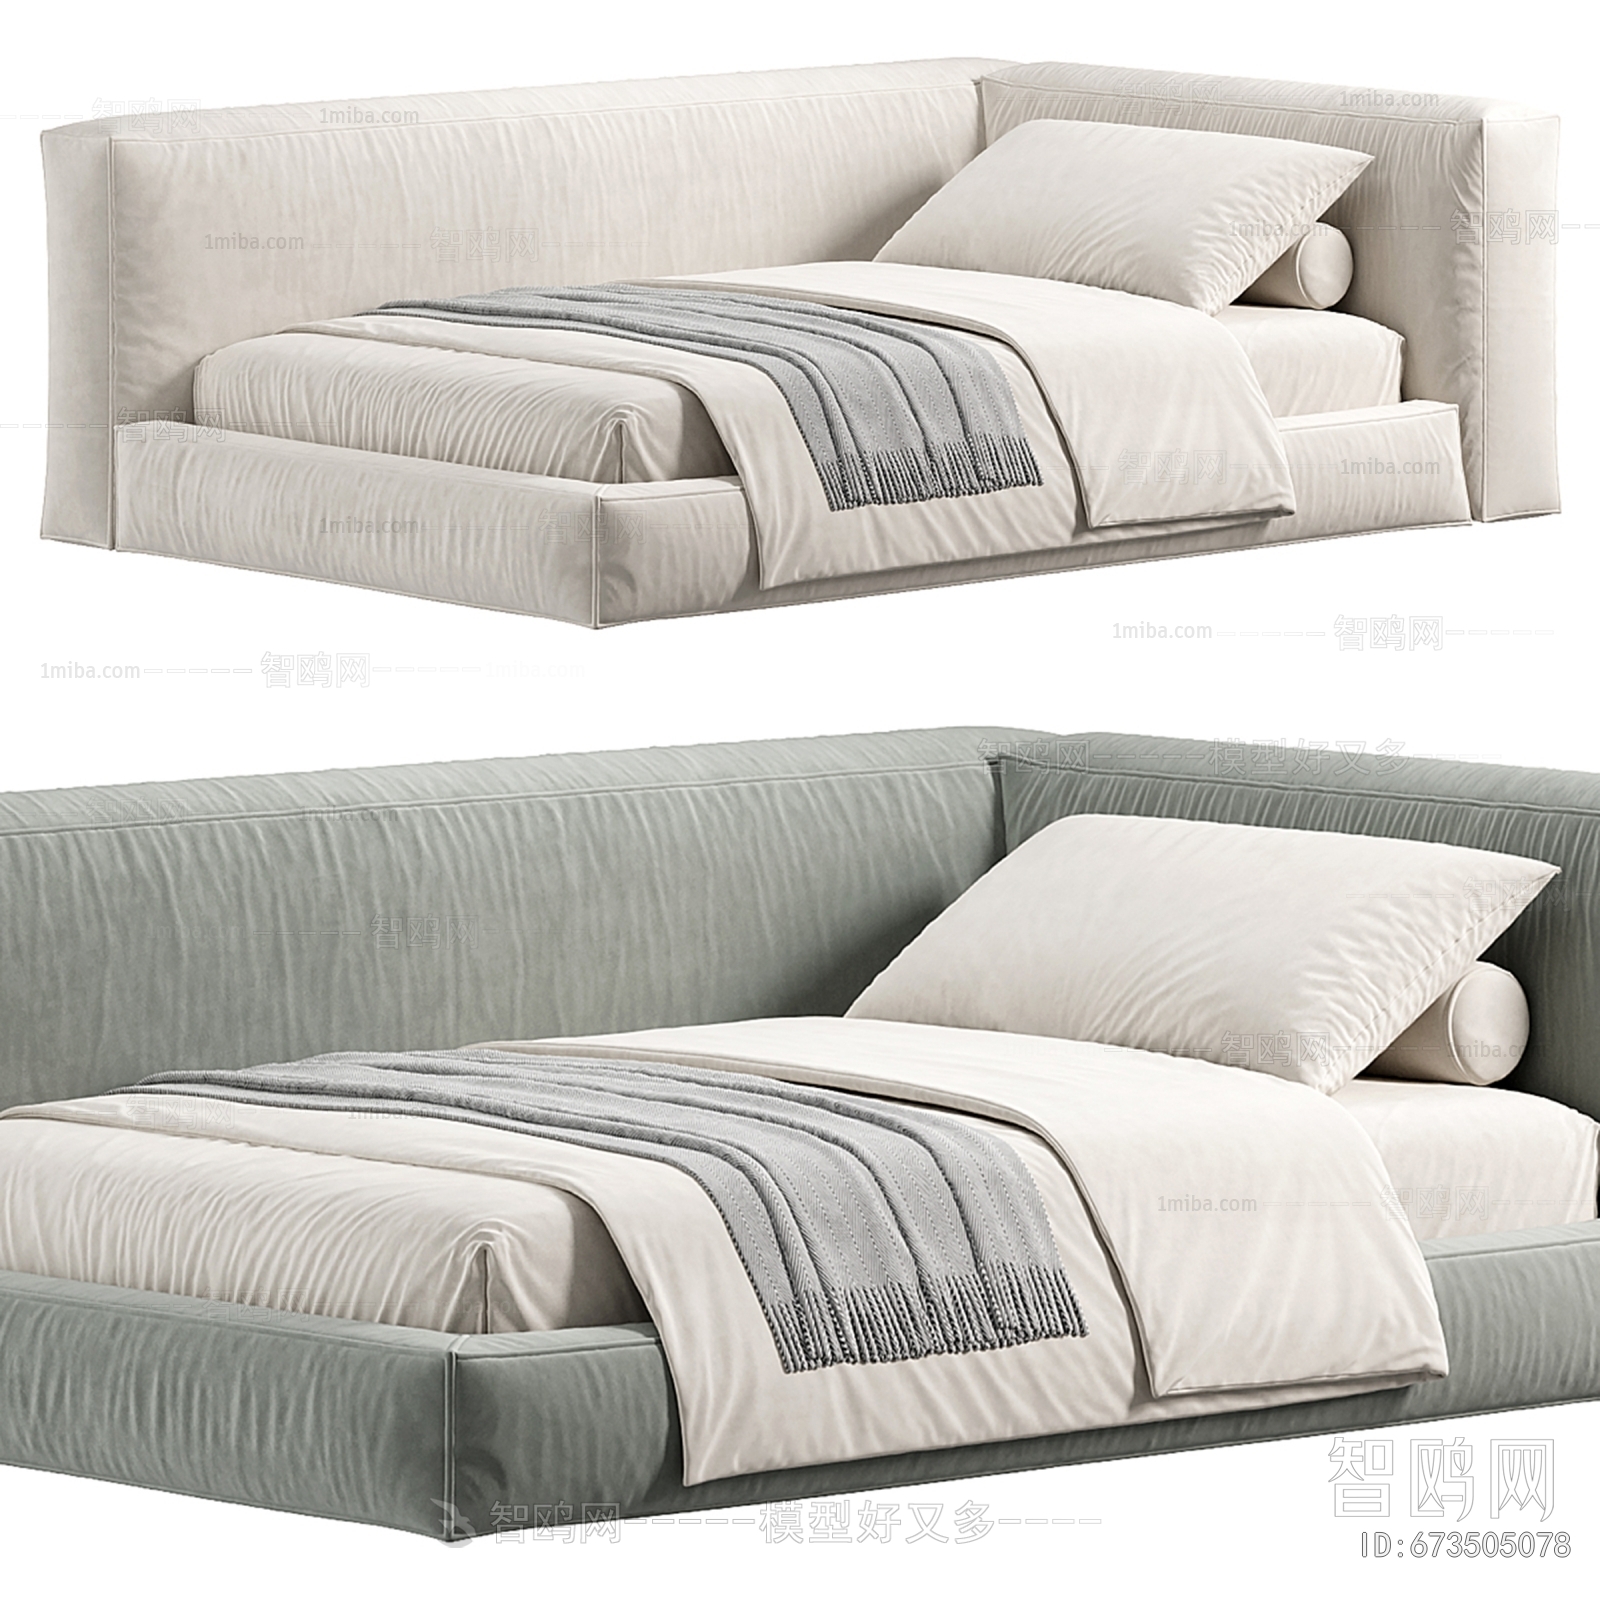 Modern Sofa Bed